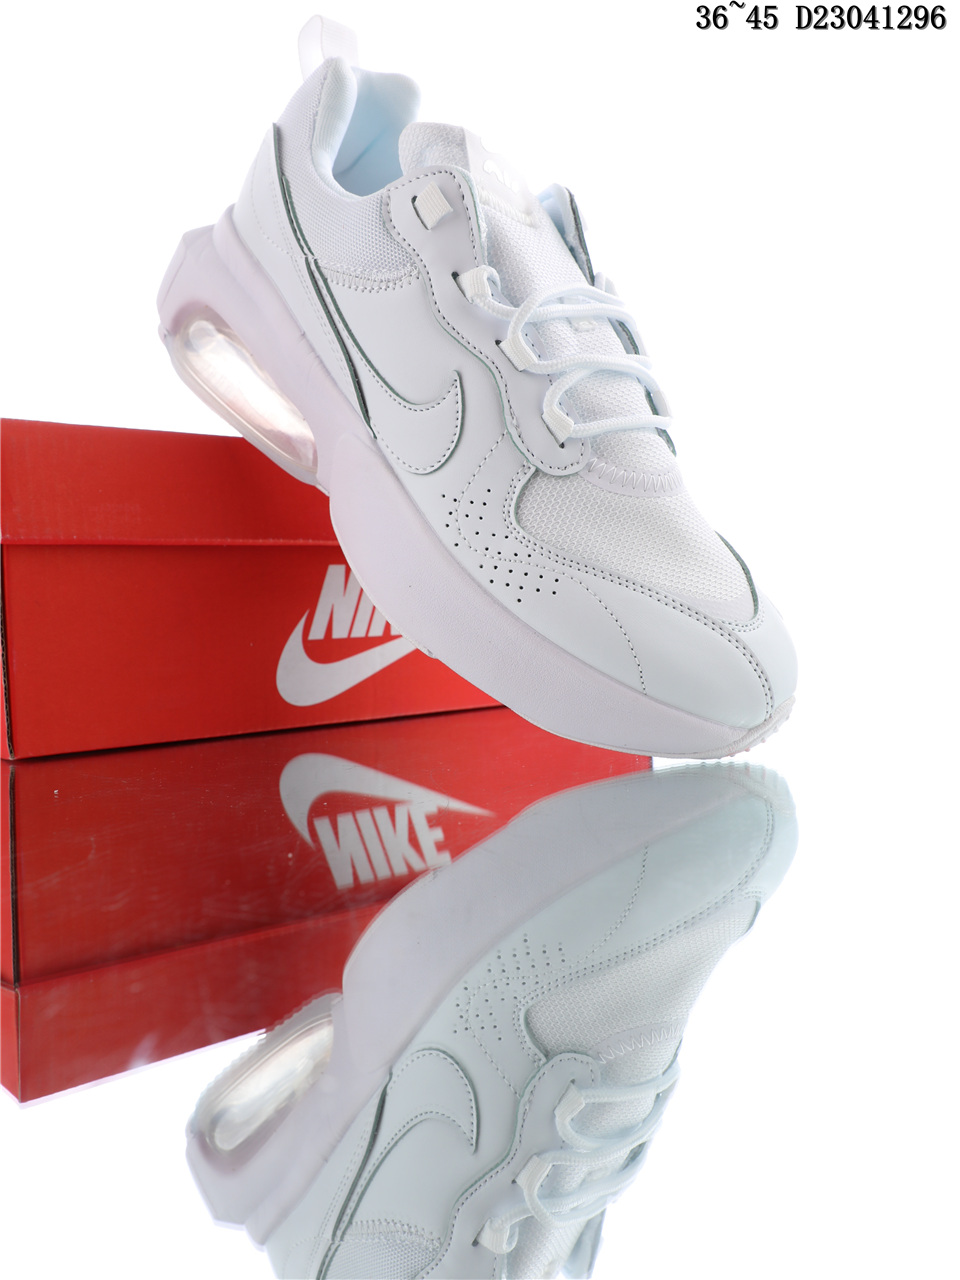 Nike Air Max Verona white cushioned running shoes Upper